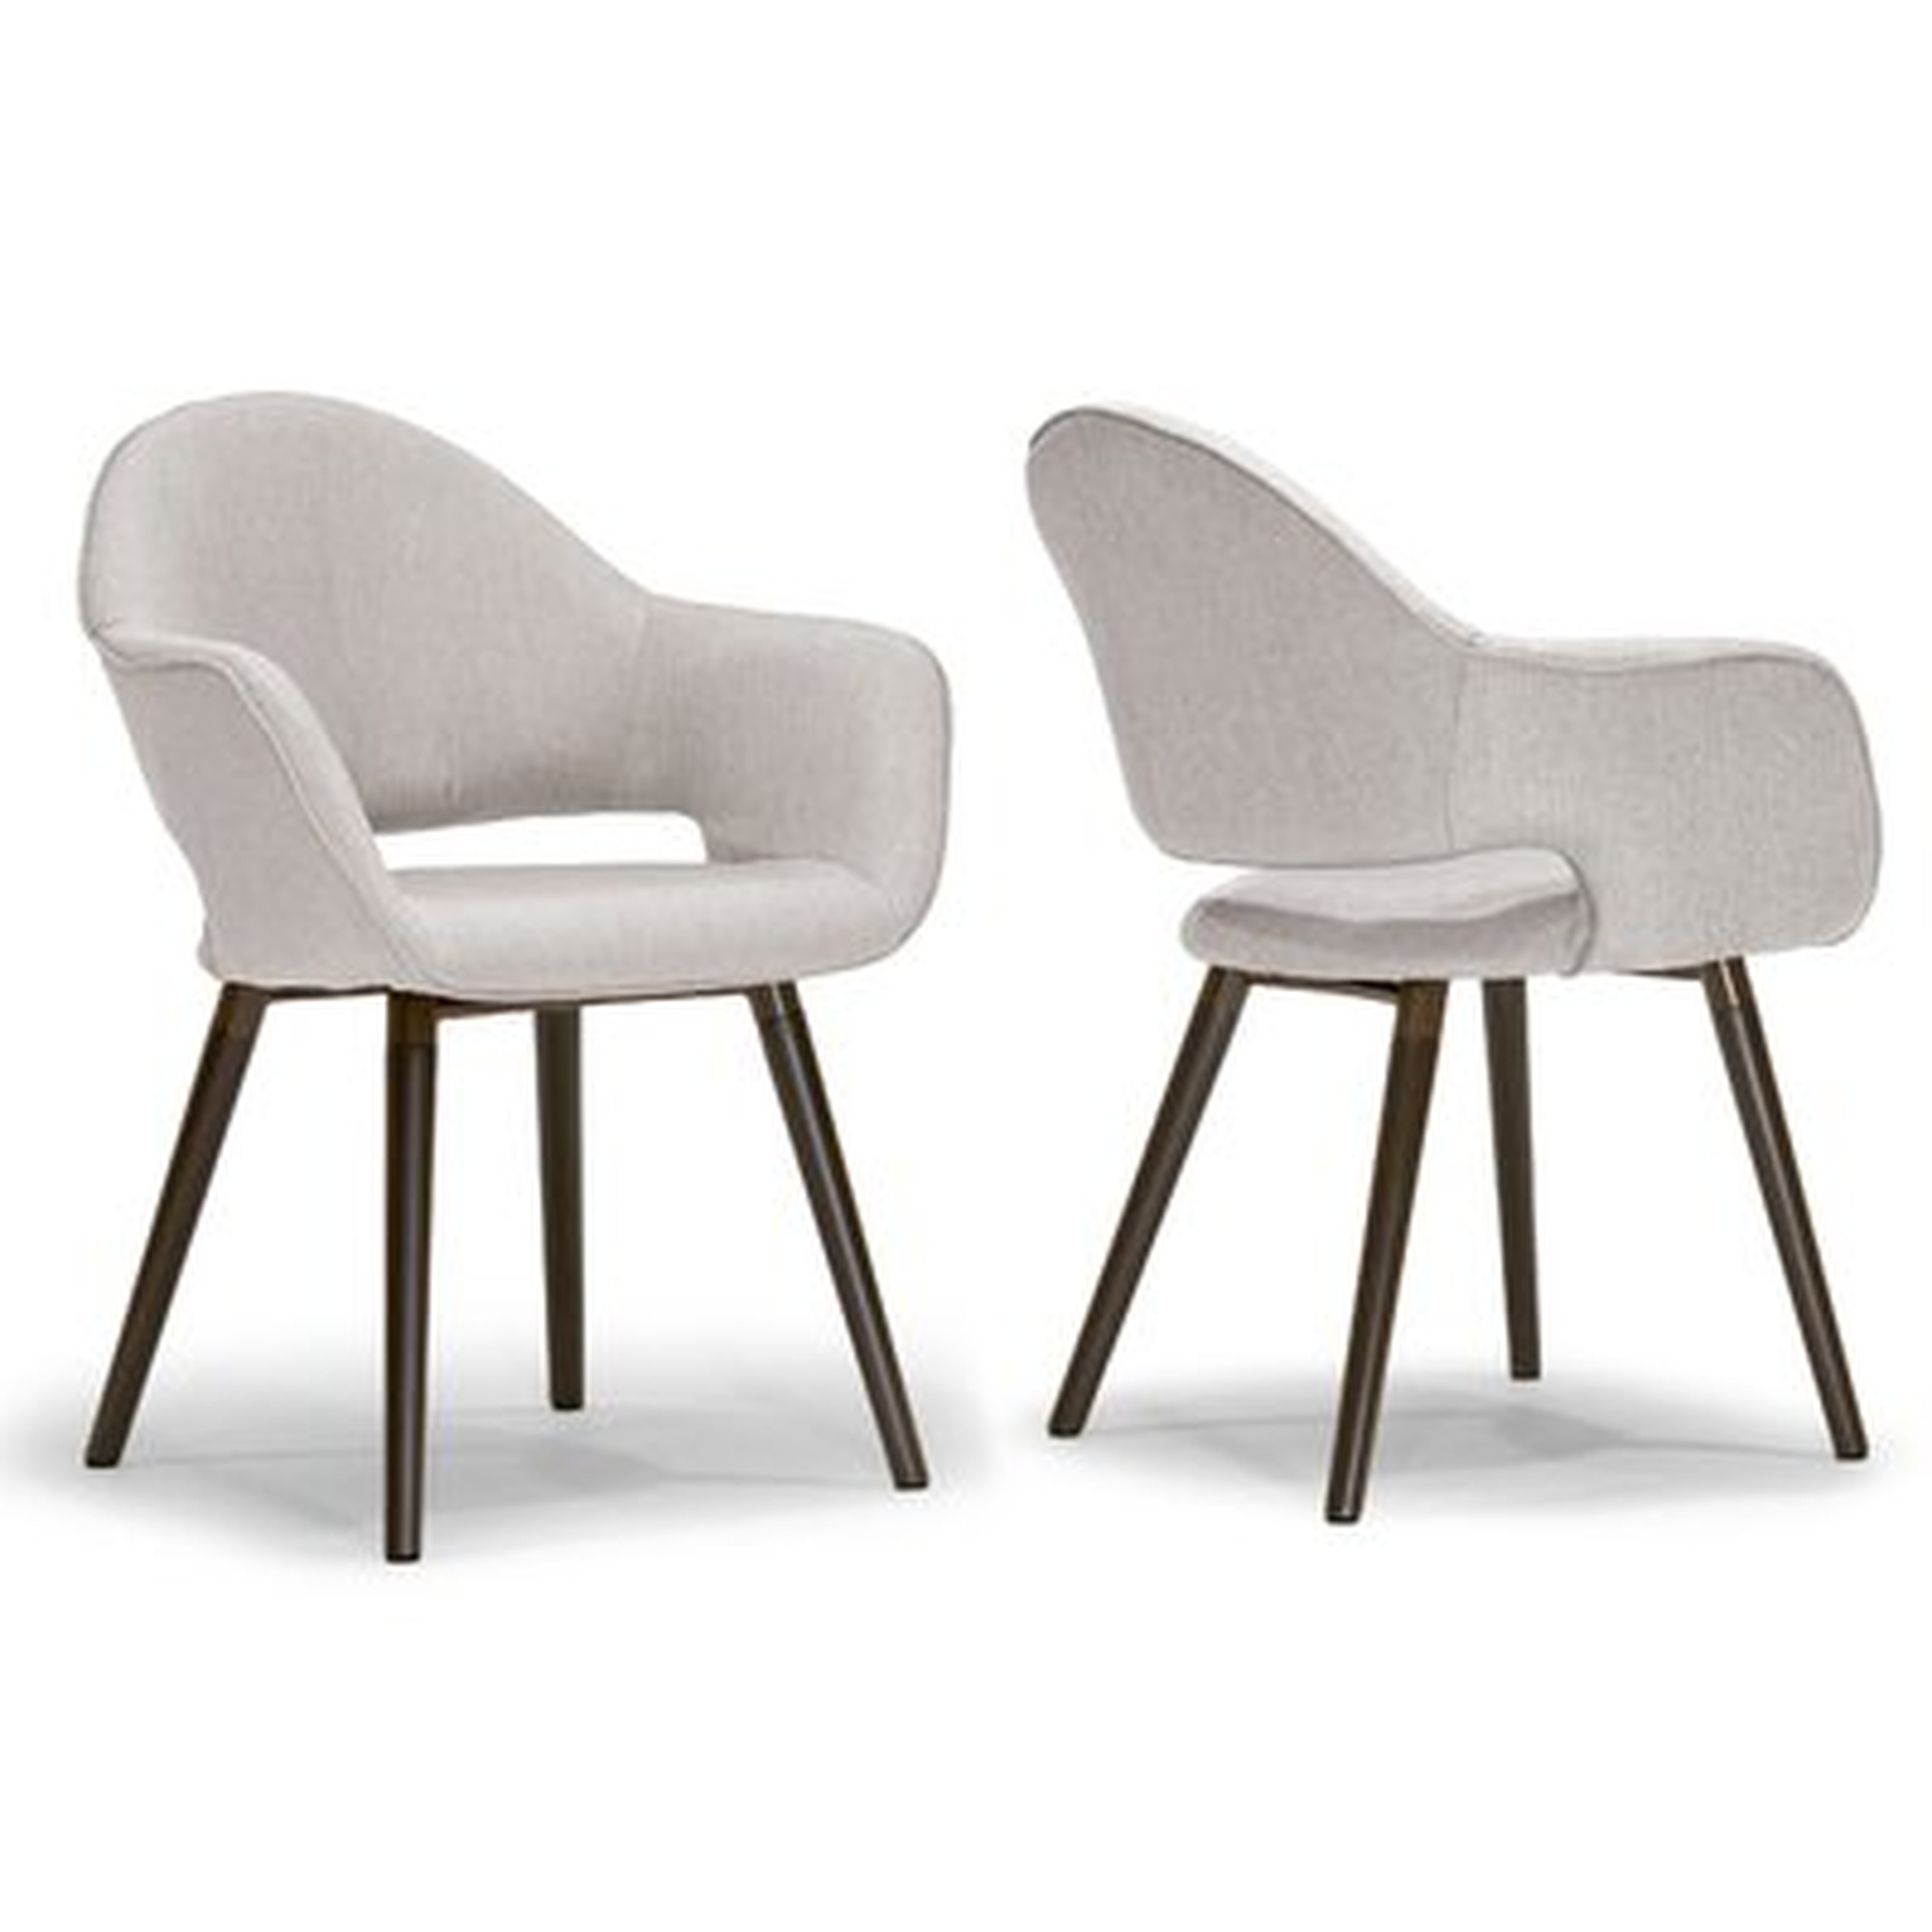 Admer Upholstered Dining Chair (Set of 2) - Wayfair